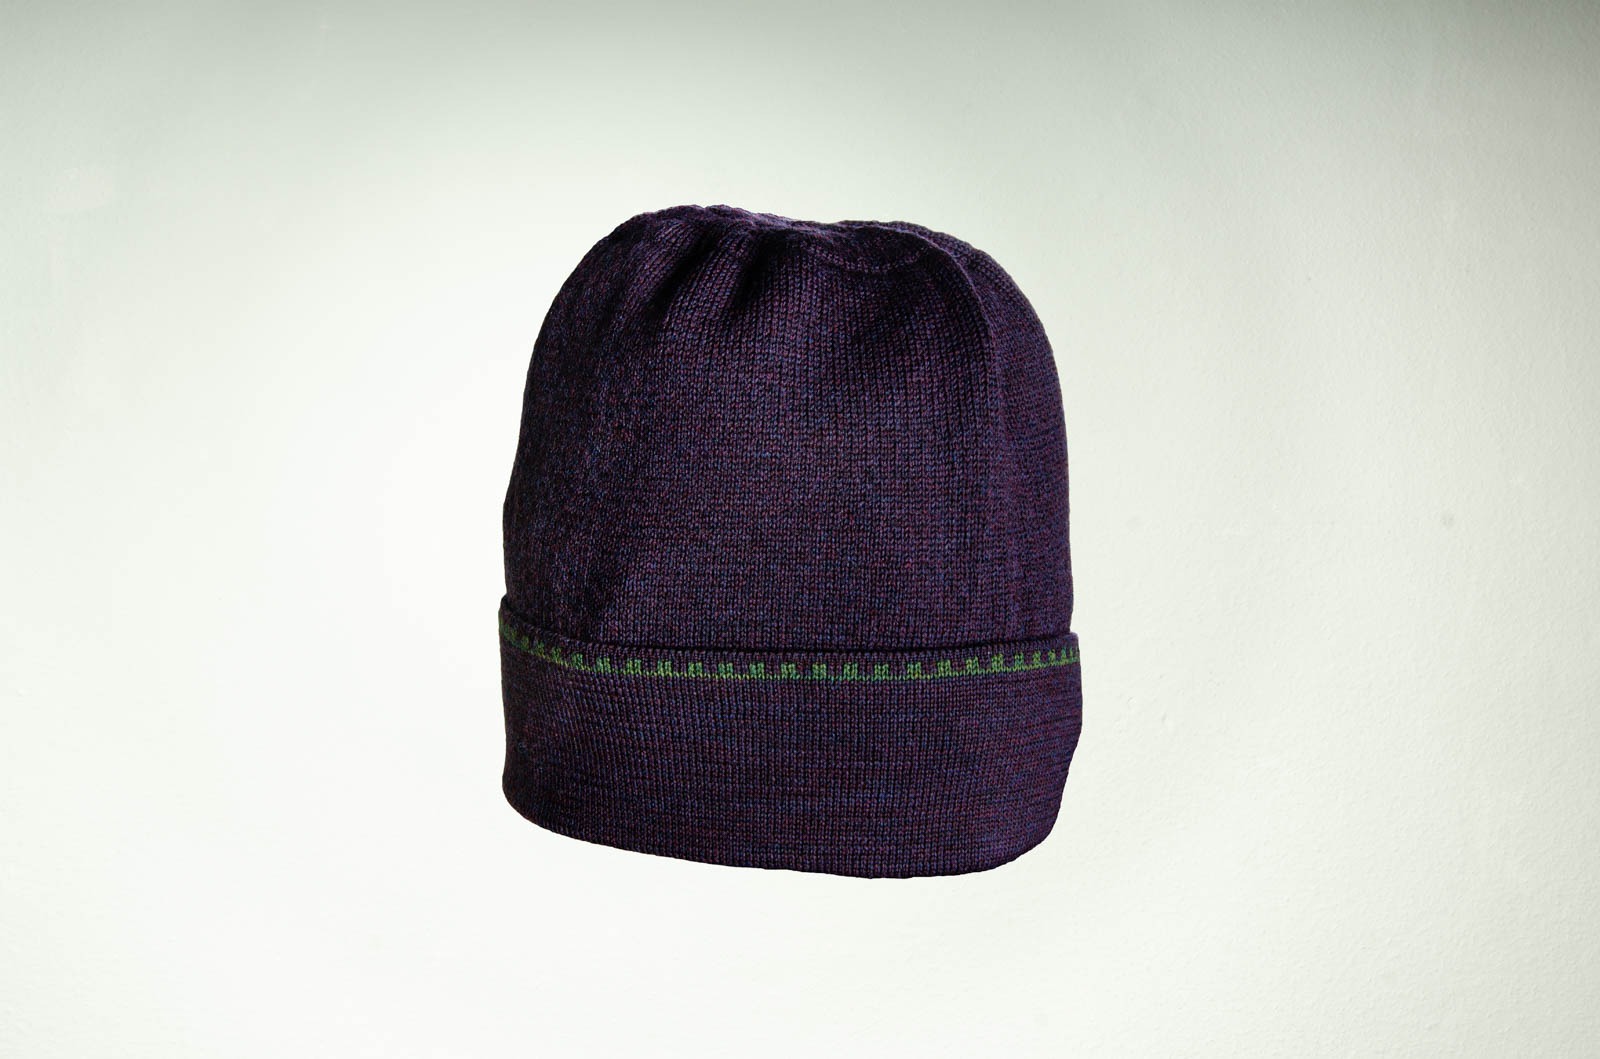 Merino scarf and hat Ireland in dark purple and dark green 6